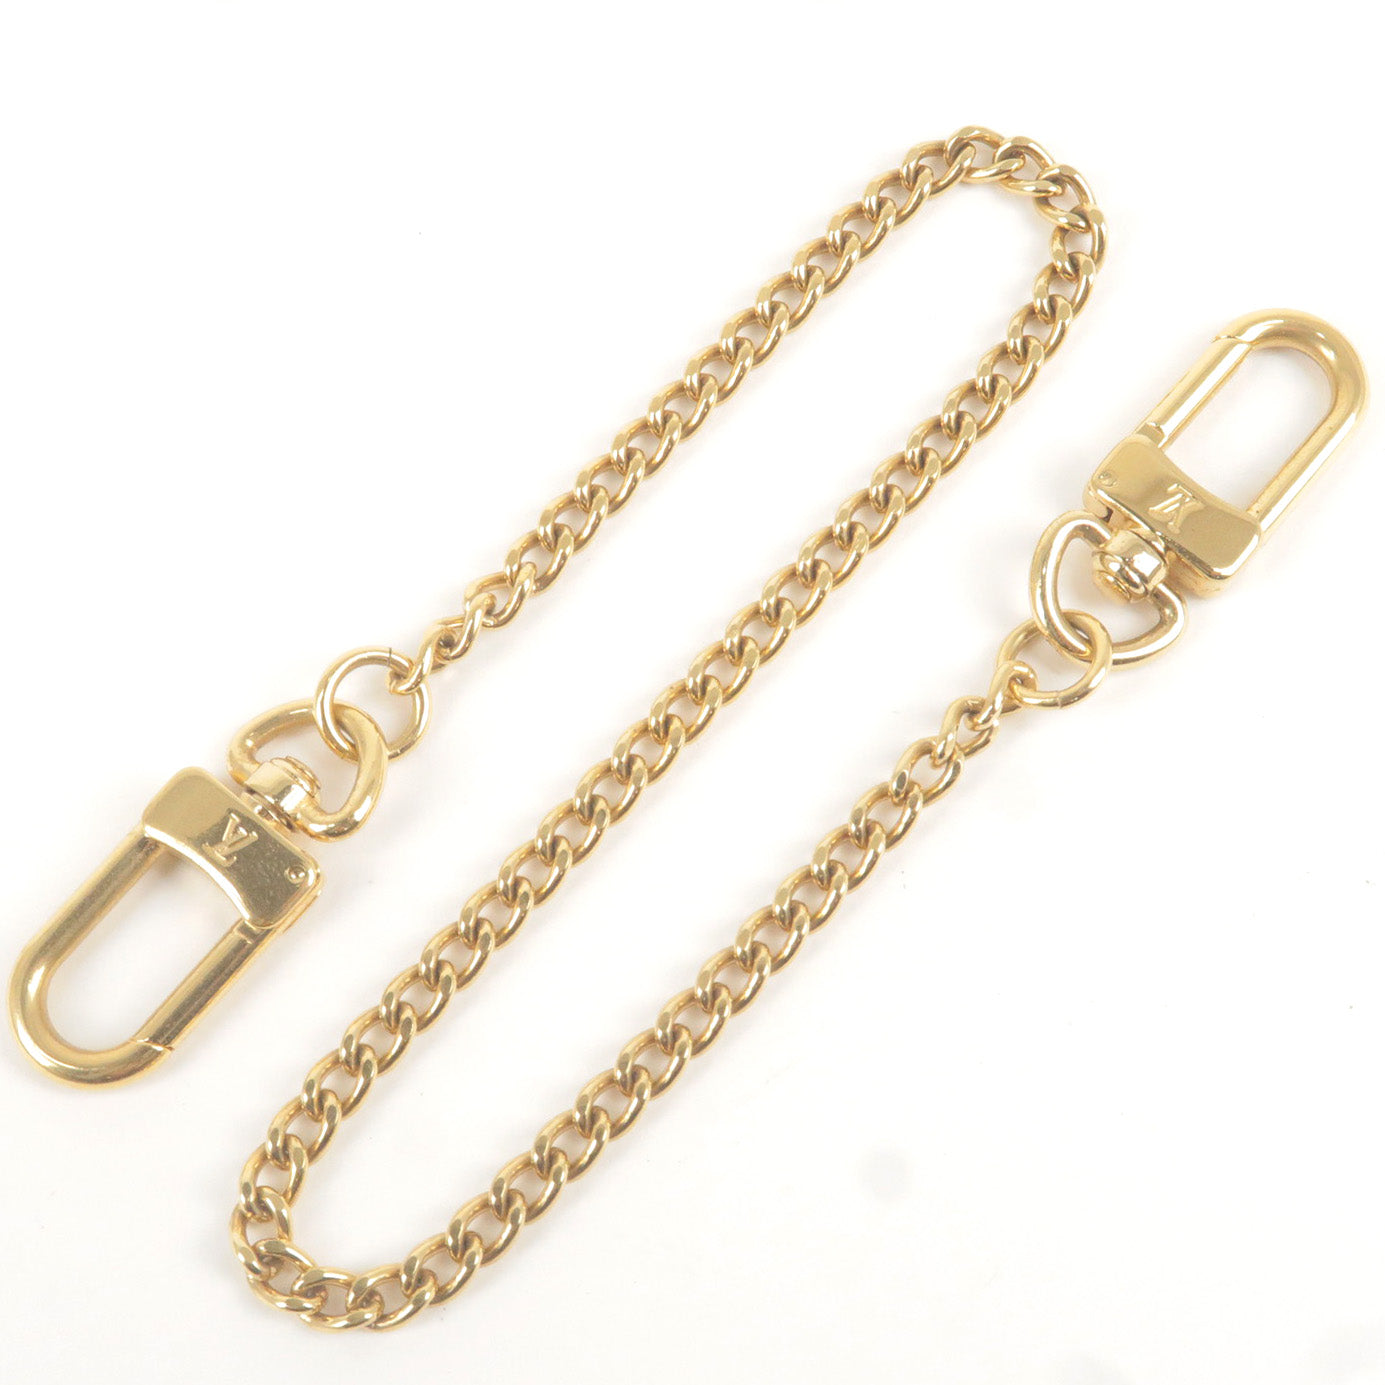 Gold Chain Strap for Louis Vuitton 